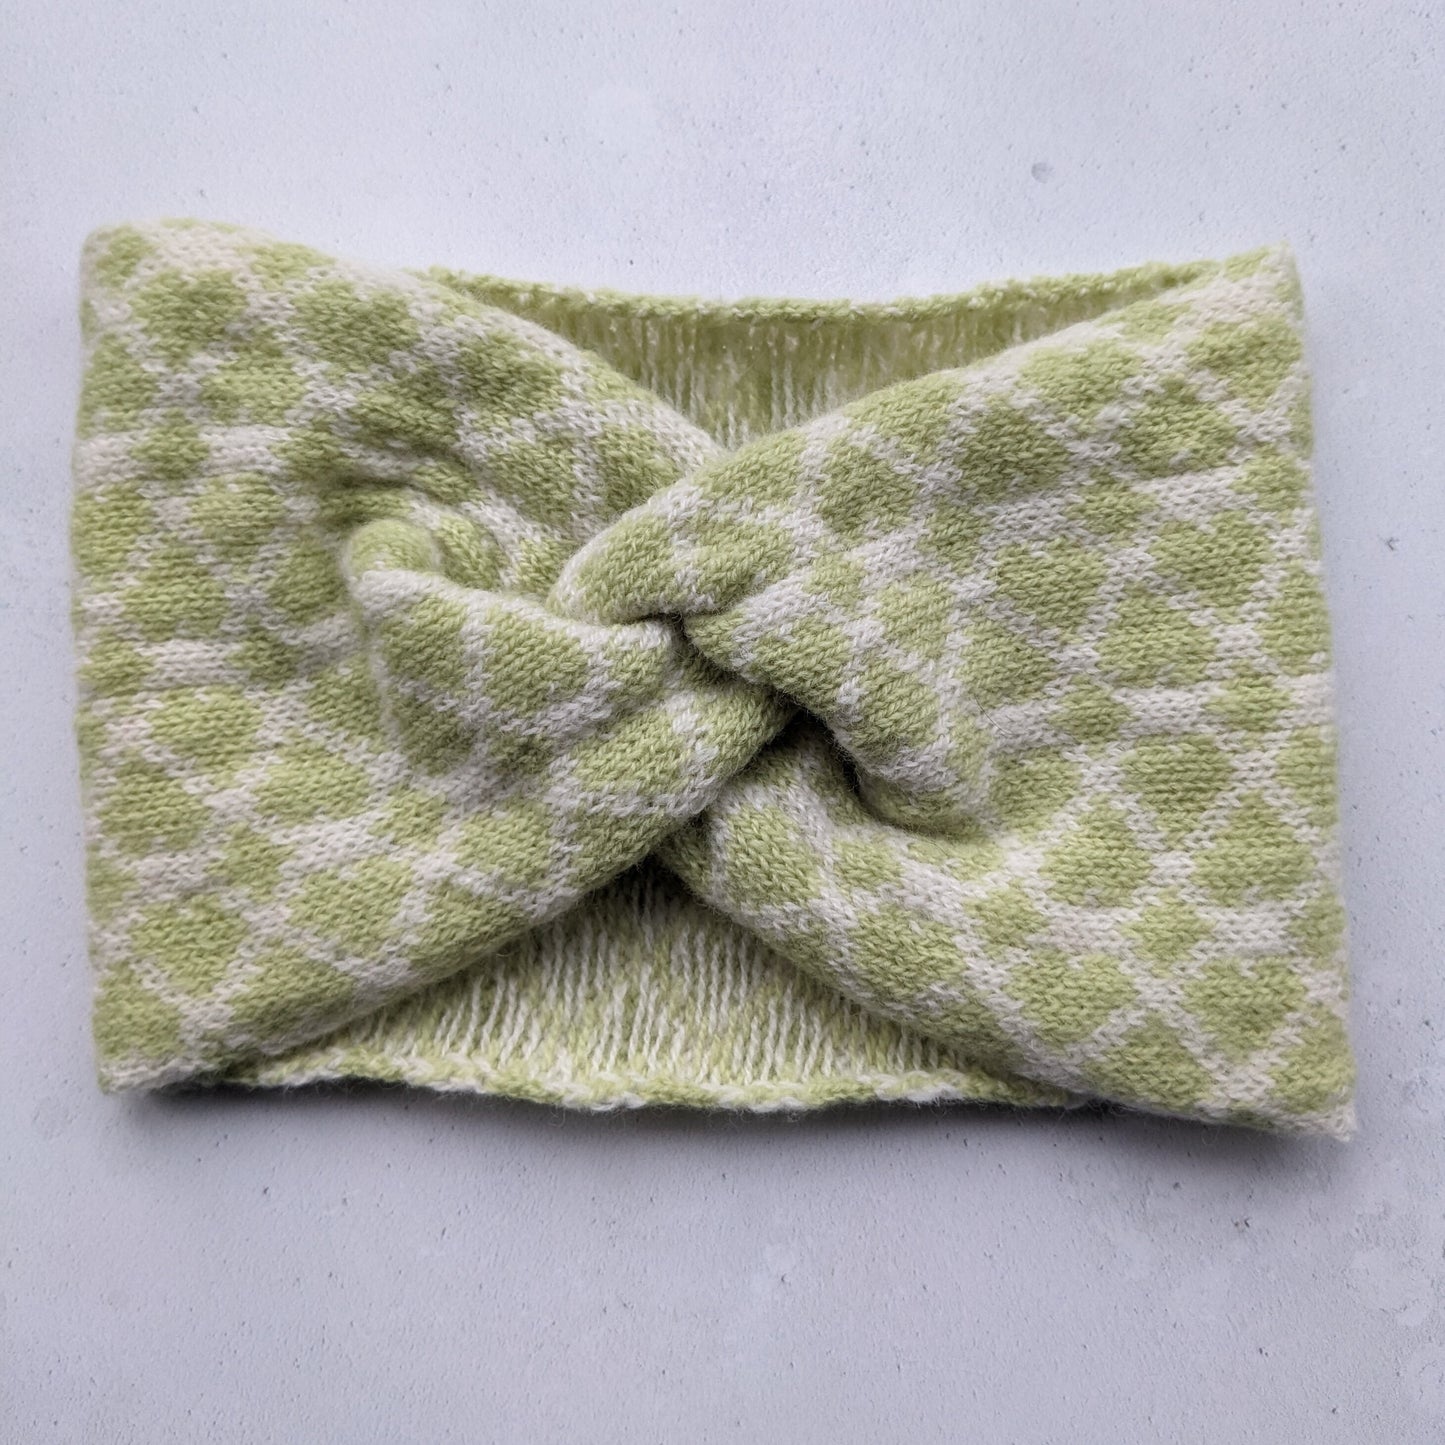 Merino wool ear warmer knitted headband ecru with pale green hearts